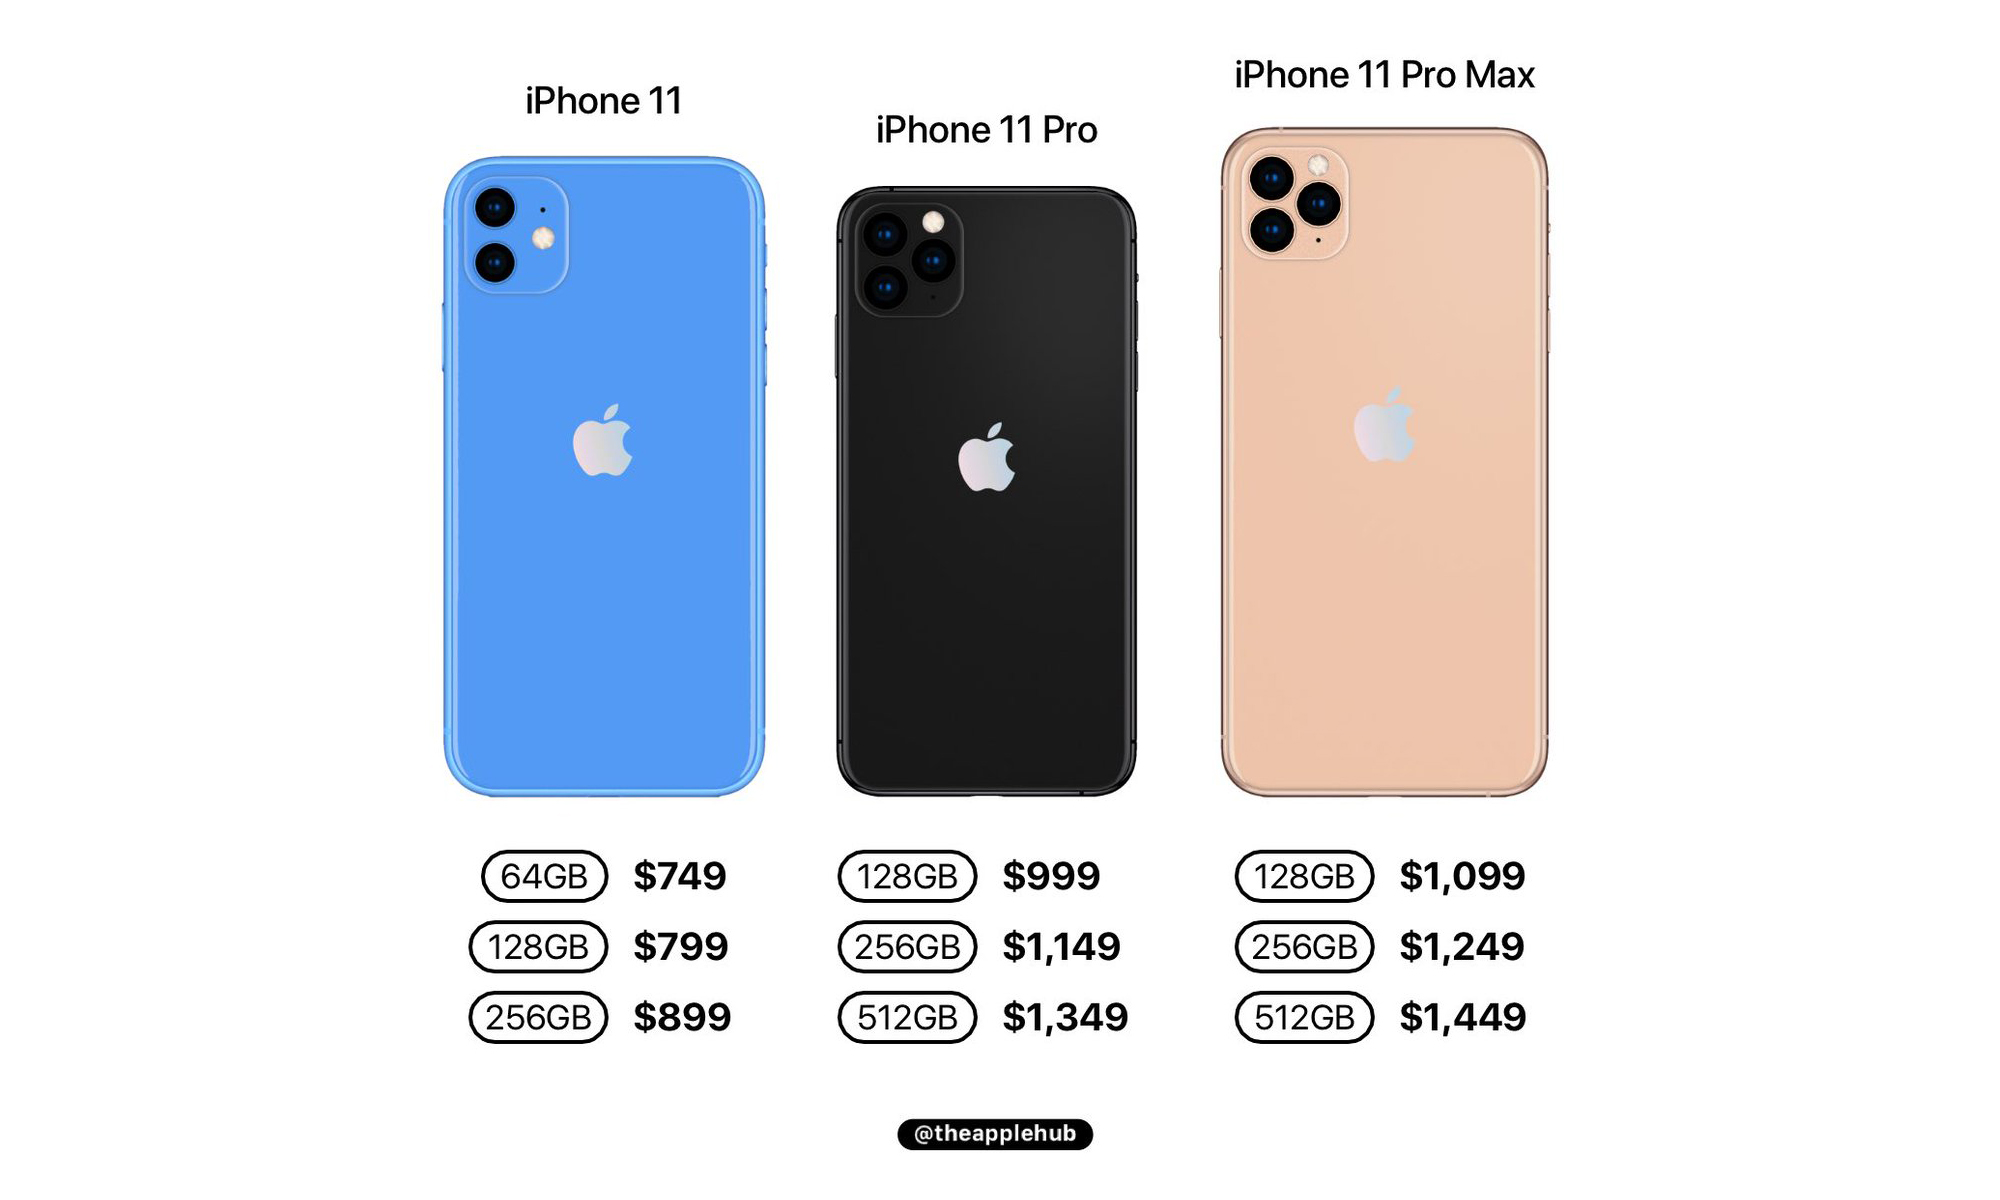 Размер apple iphone. Айфон 11 и 11 про сравнение размеров. Iphone 11 габариты. Айфон 11 и 12 сравнение размеров. Айфон 11 про ркщмер сравнение.